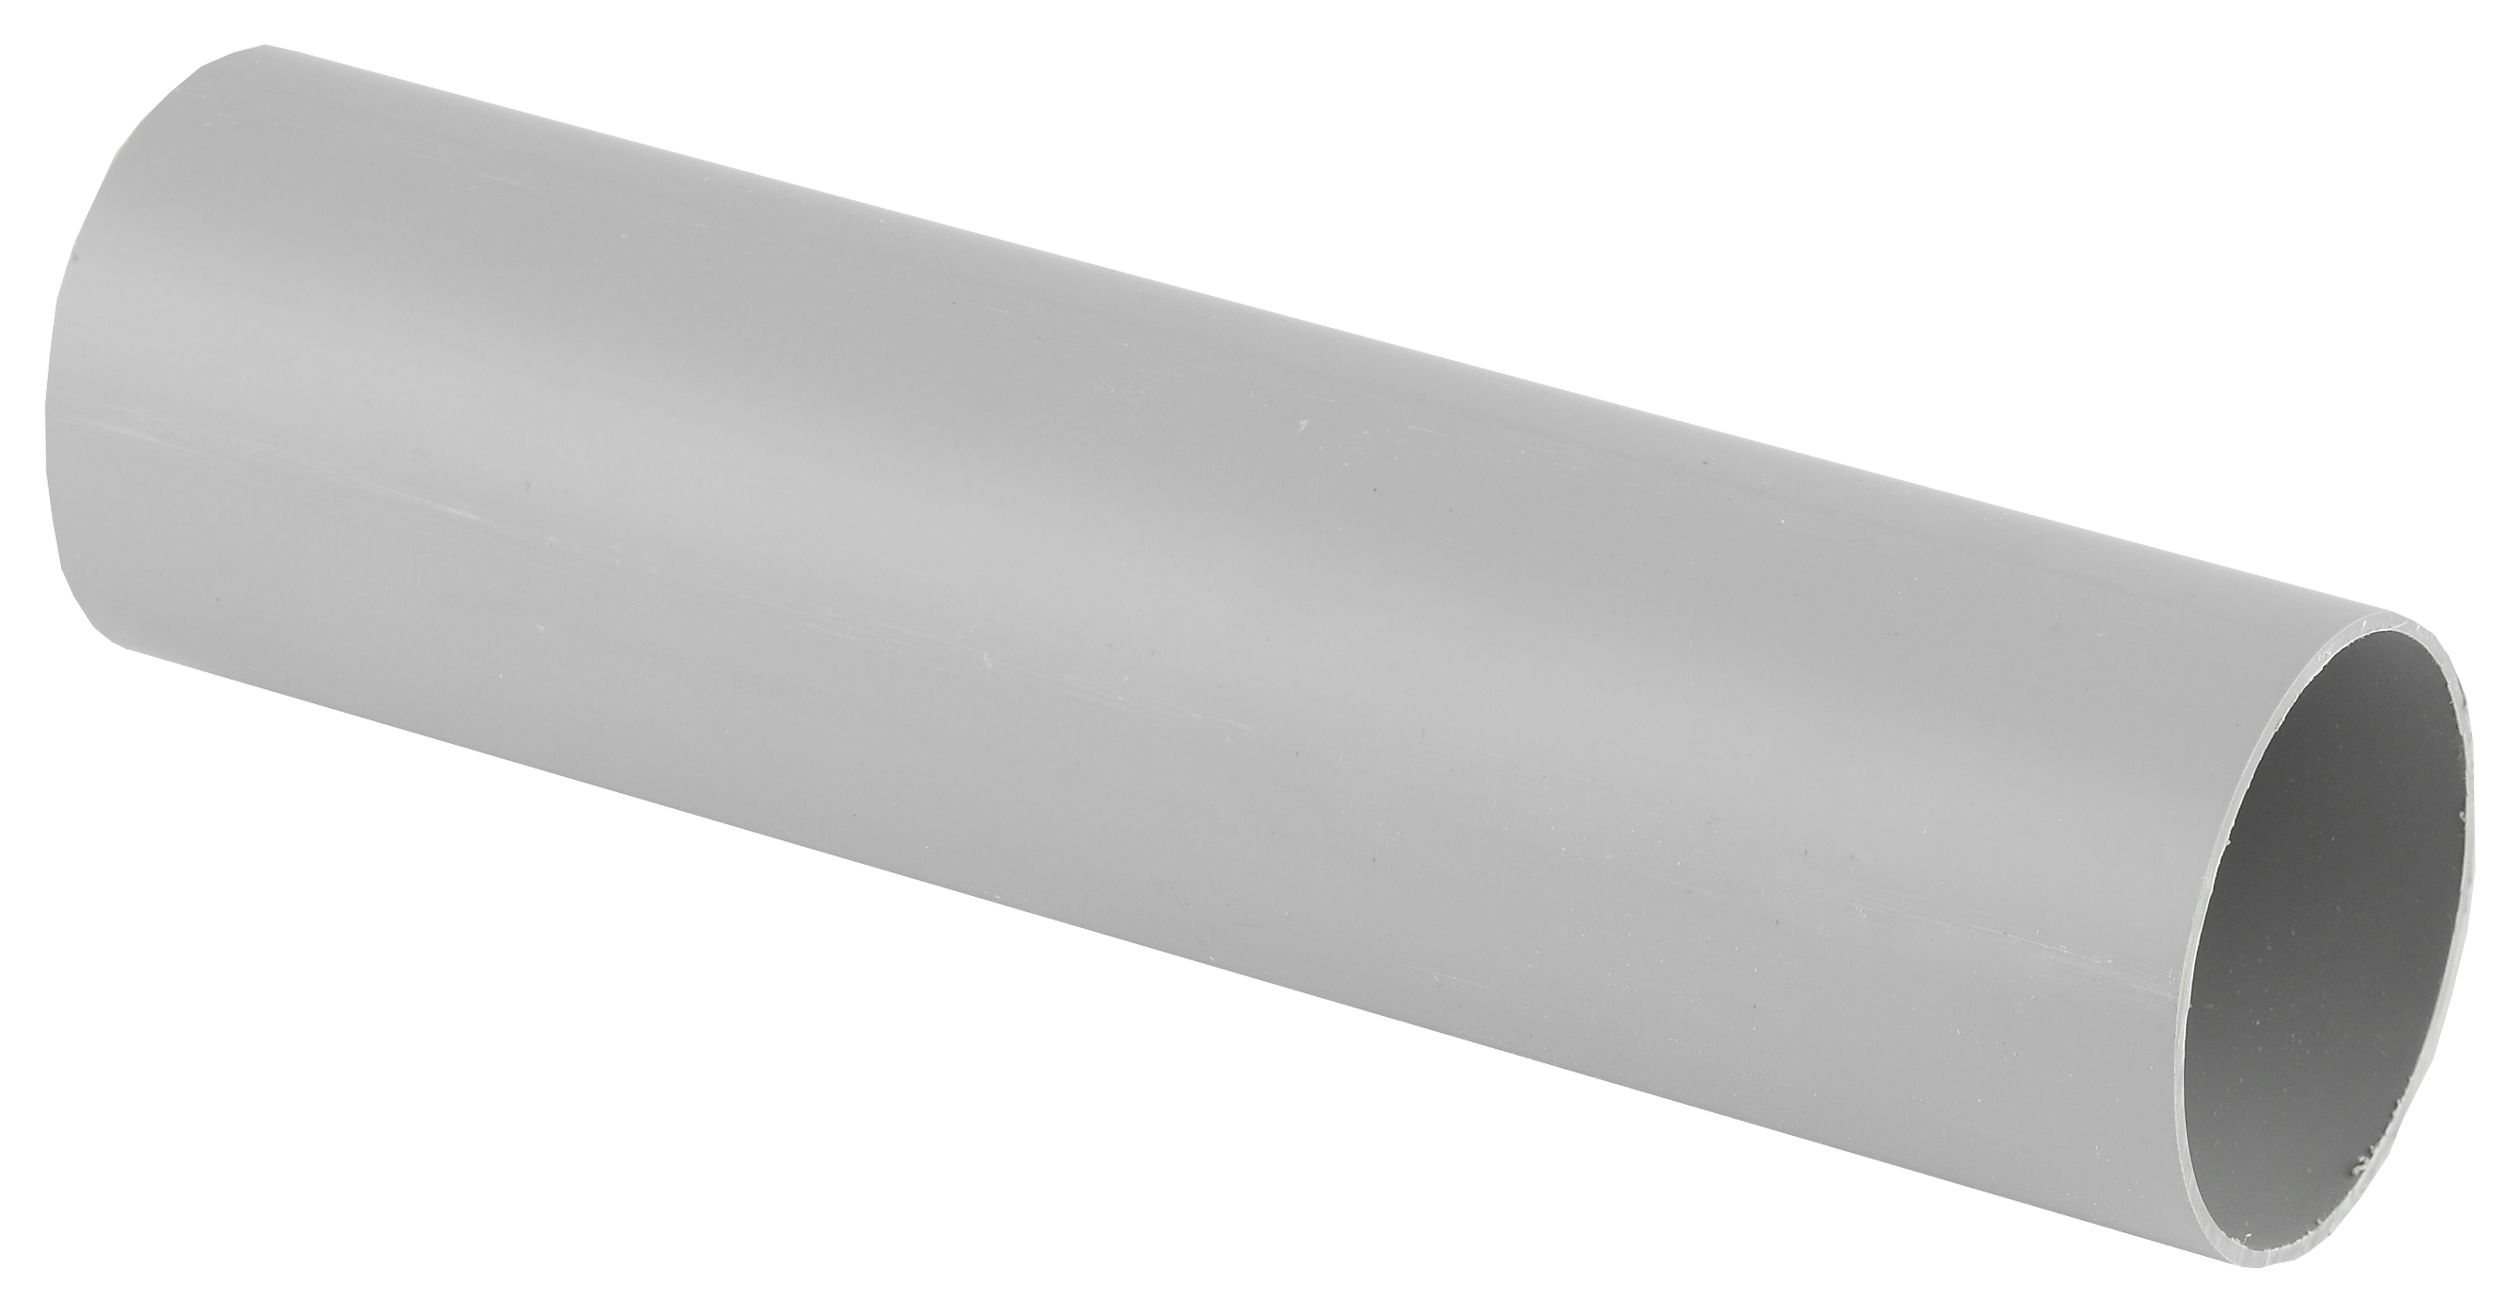 ЭРА Муфта соедин. (серый)  для трубы d 25мм IP44 (5шт) (5/300/10800)